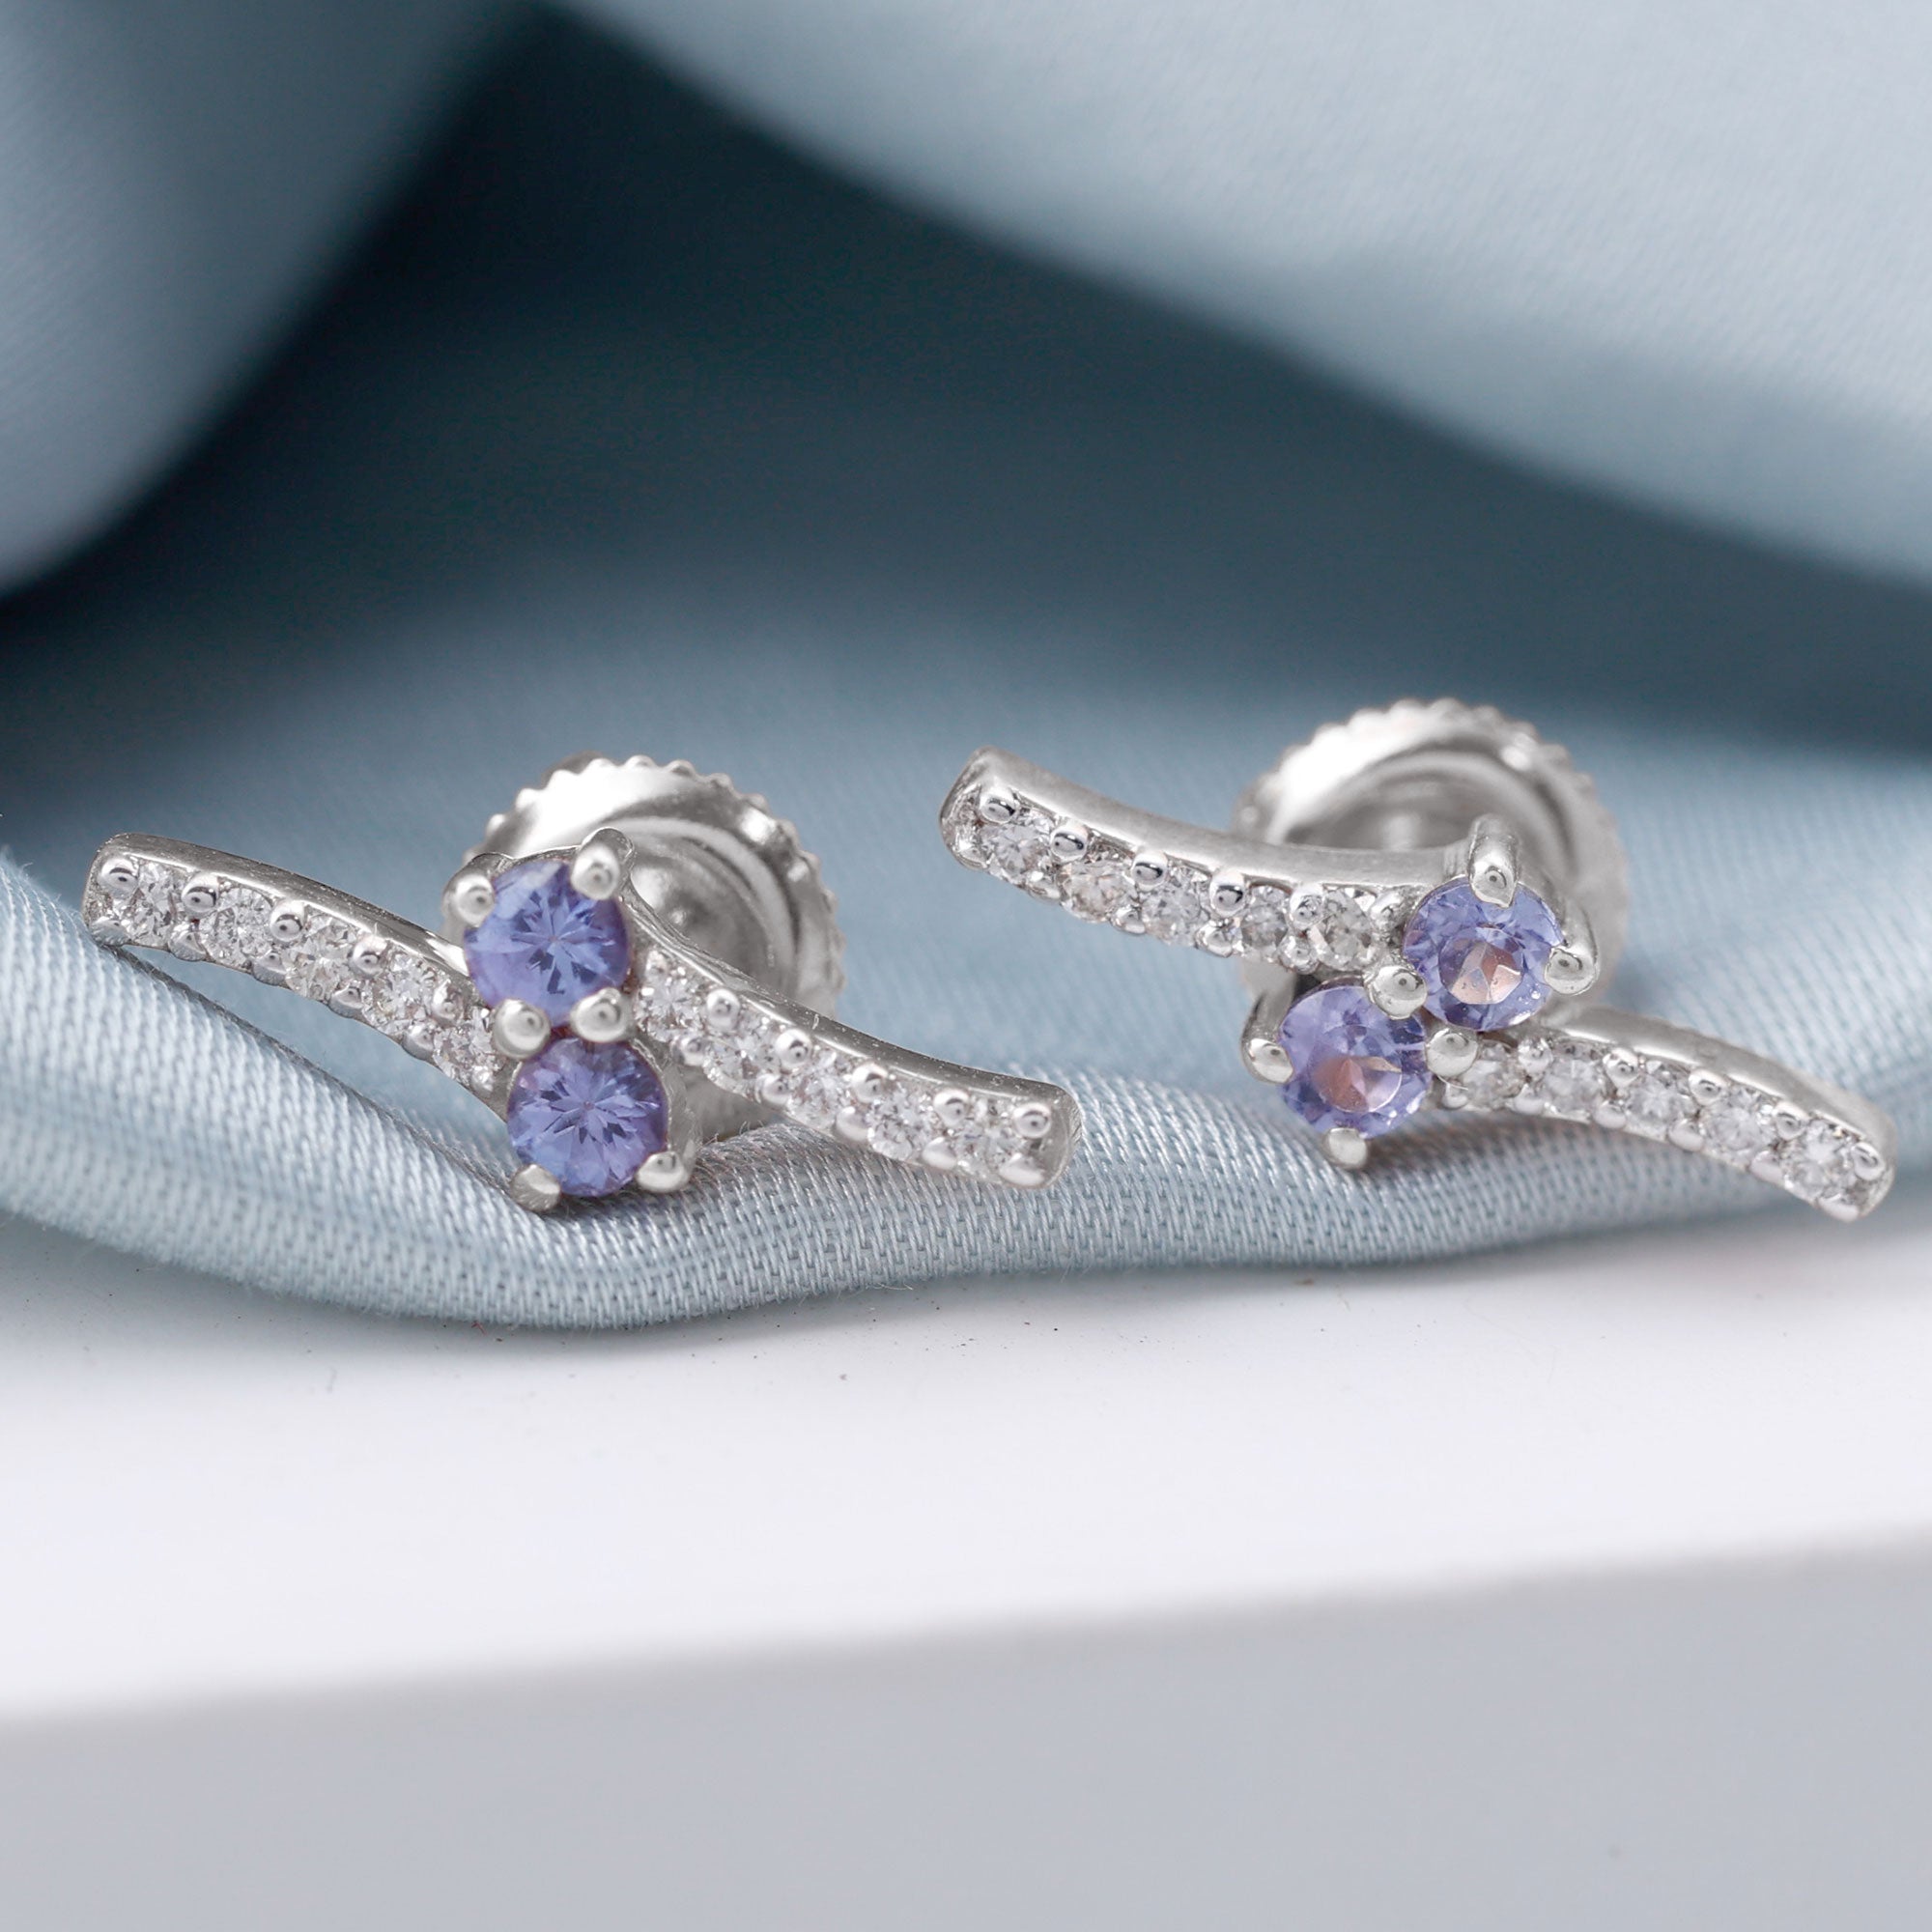 Real Tanzanite and Diamond Minimal Stud Earrings Tanzanite - ( AAA ) - Quality - Rosec Jewels